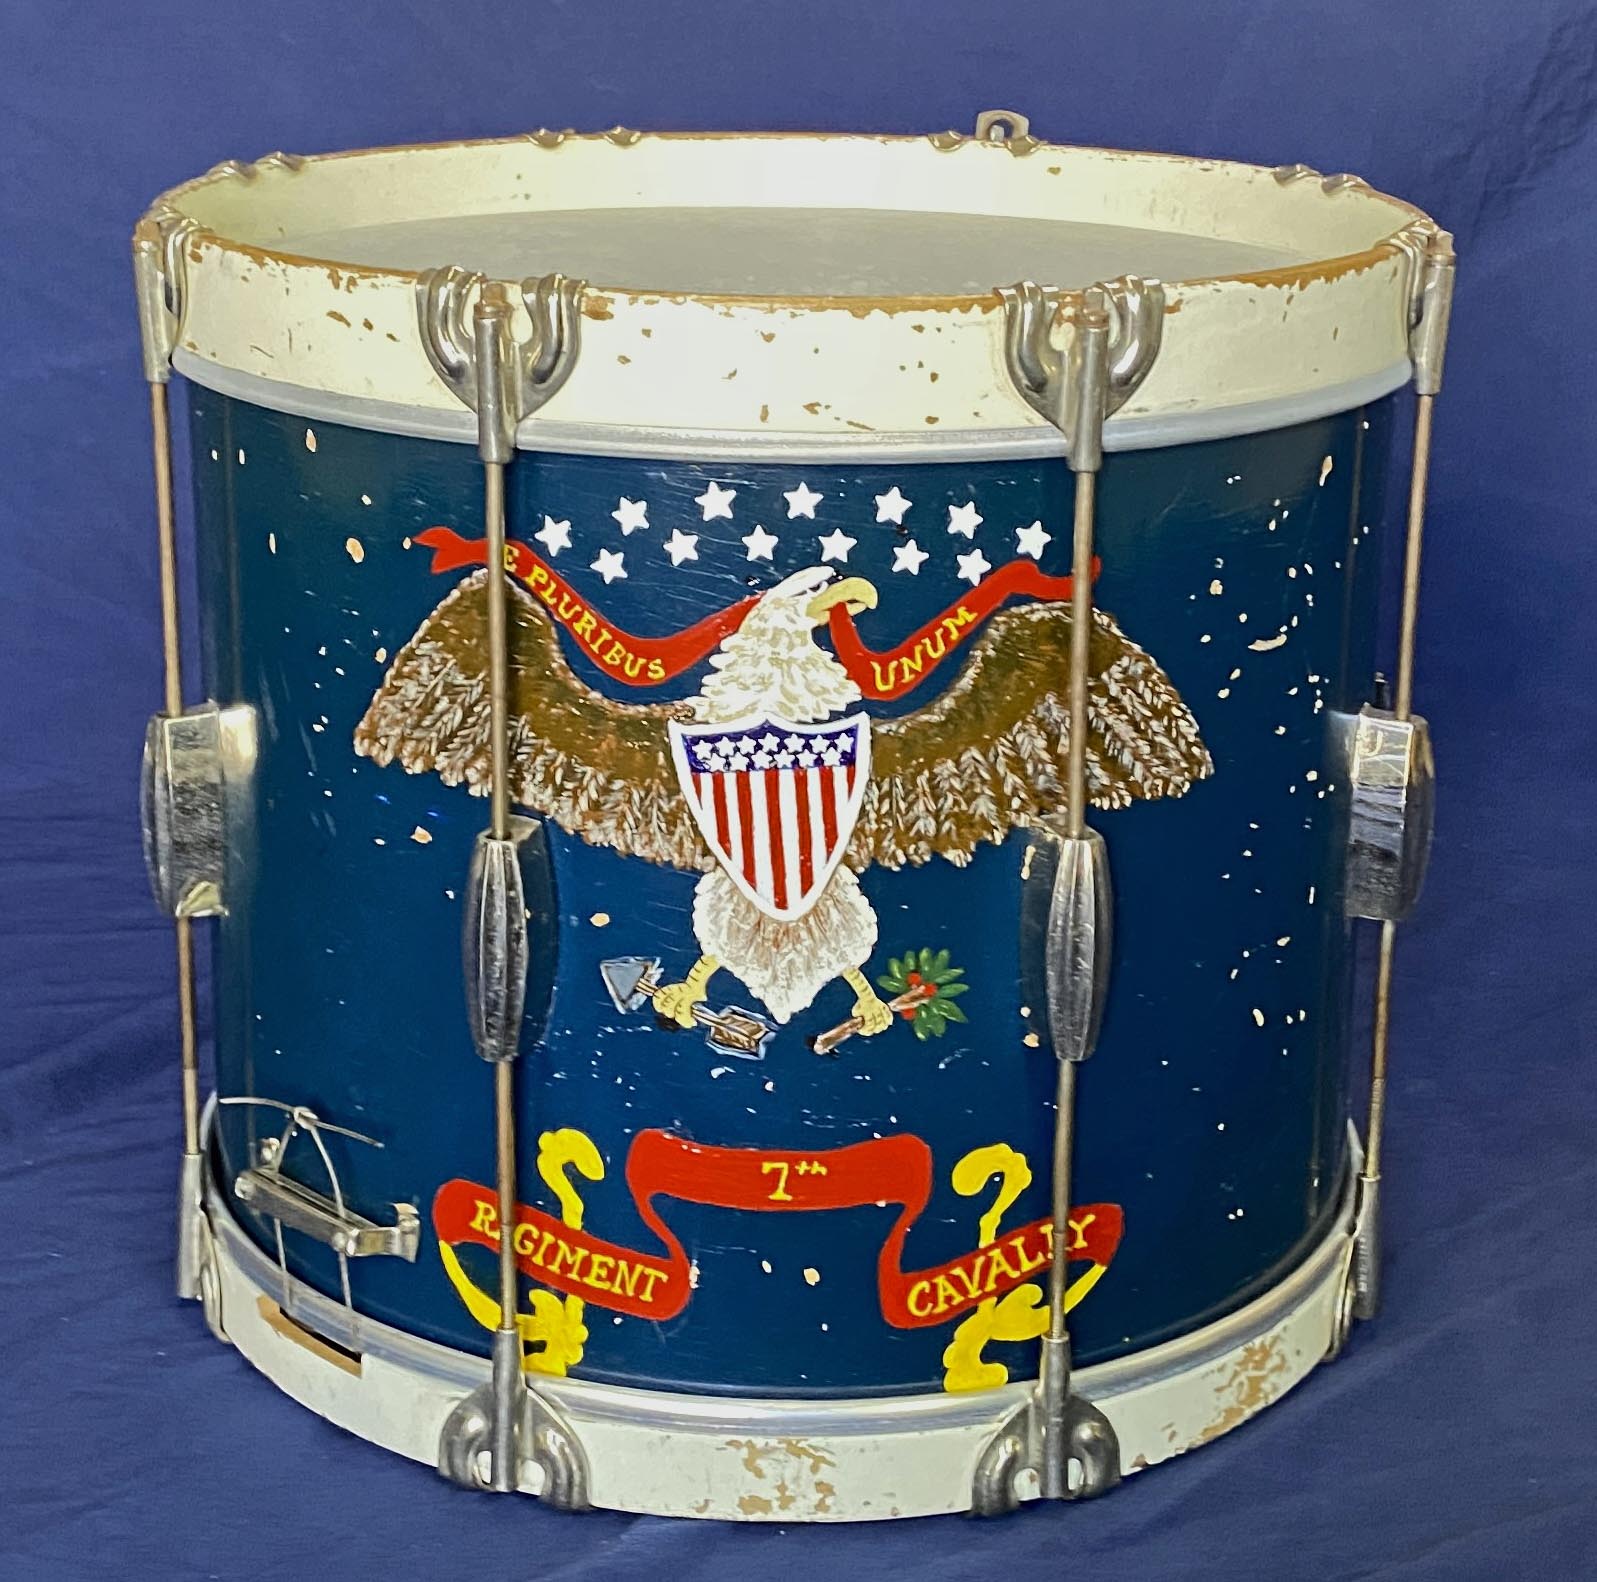 Snare Drum Rental - Pearl Philharmonic 4 x 14 Maple – California Percussion  & Backline Rental